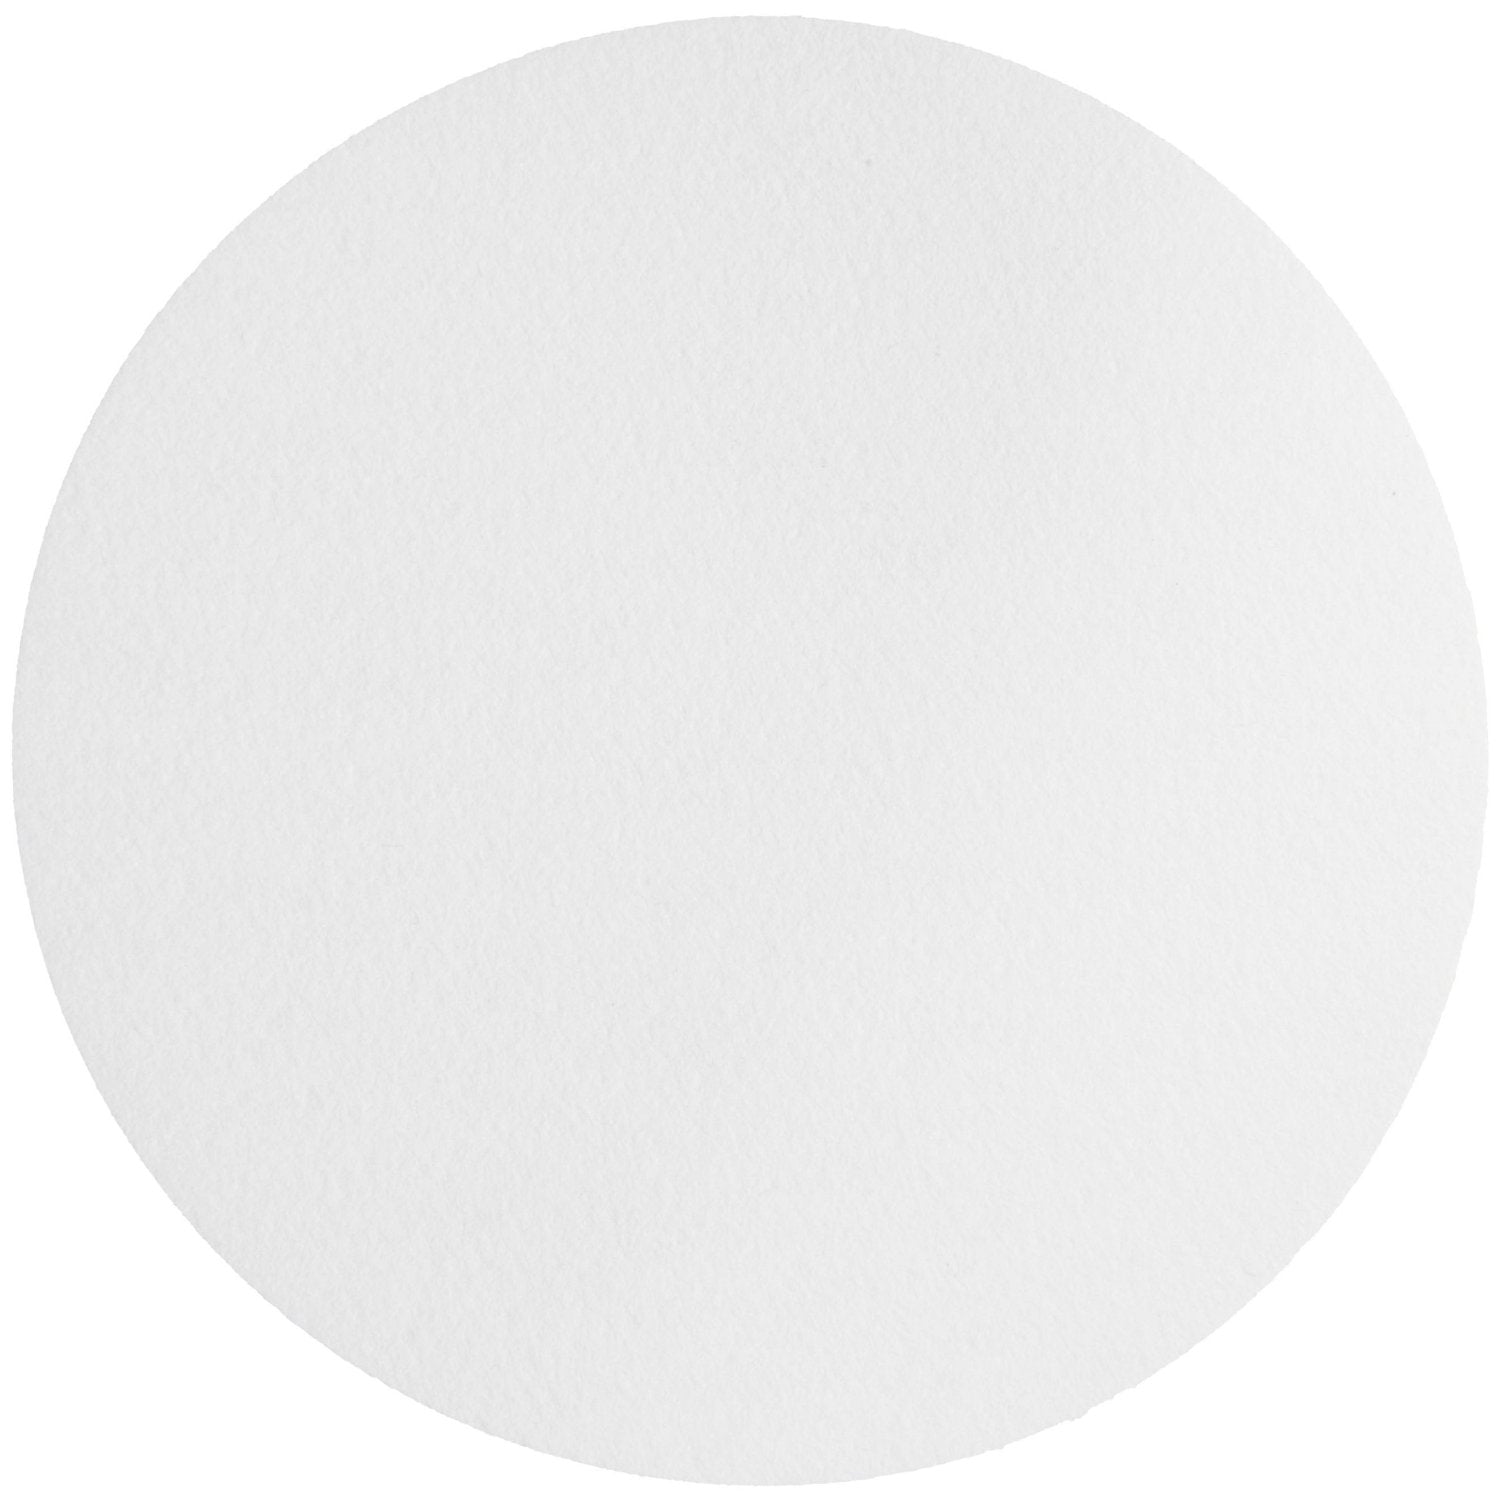 Whatman 7195-004 Cellulose Nitrate, 47mm Dia, 5.0 micrometer Pore Size, Plain White, 100/pk (PN: 7195-004)